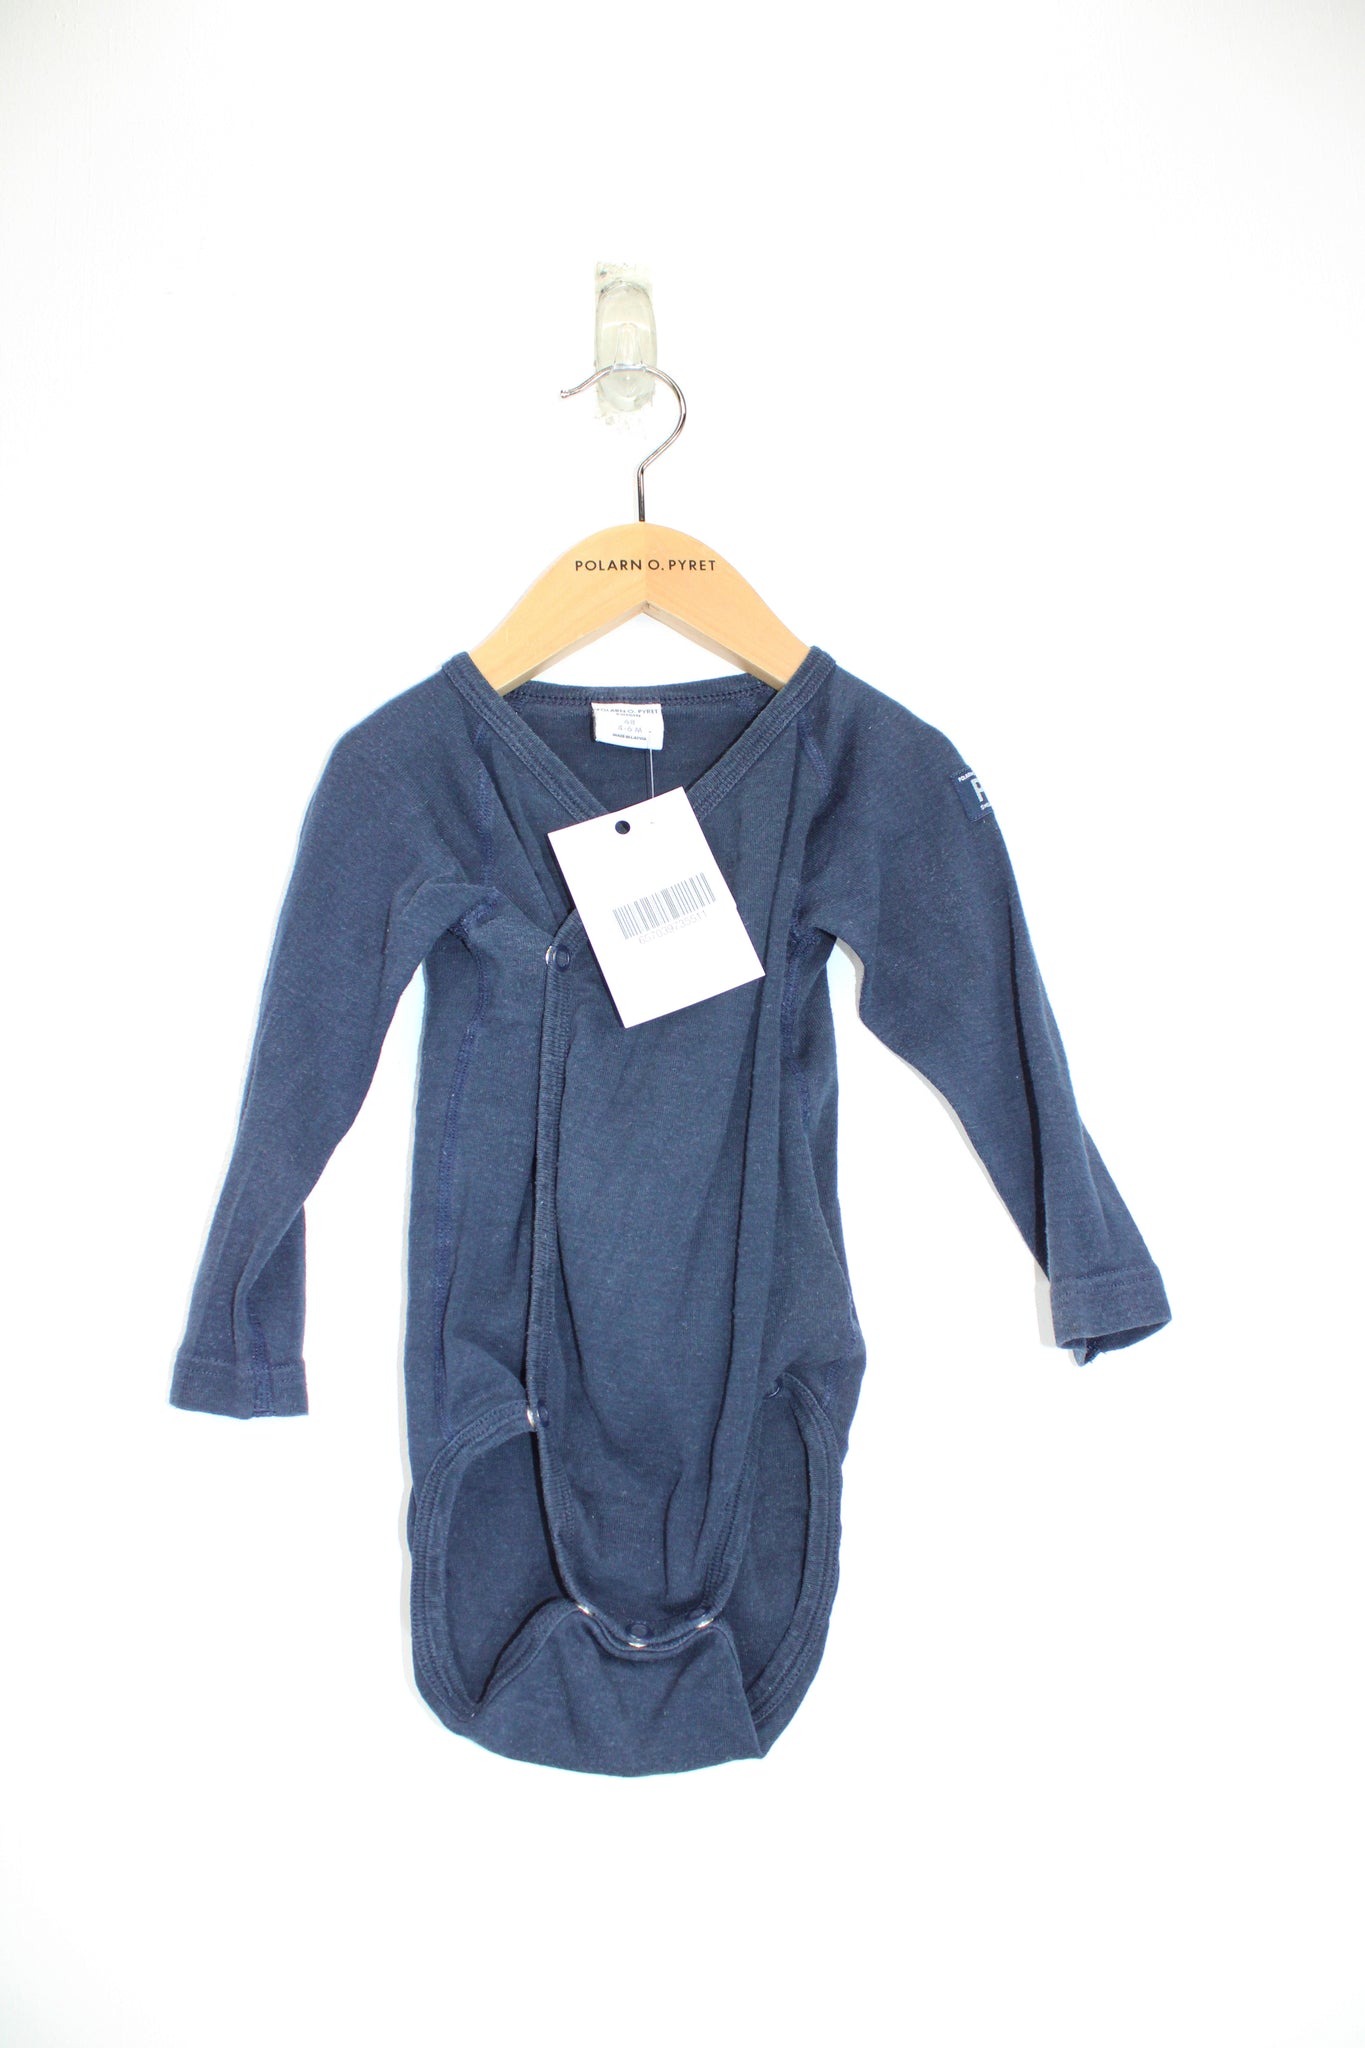 Baby Long Sleeve Bodysuit 4-6m / 68